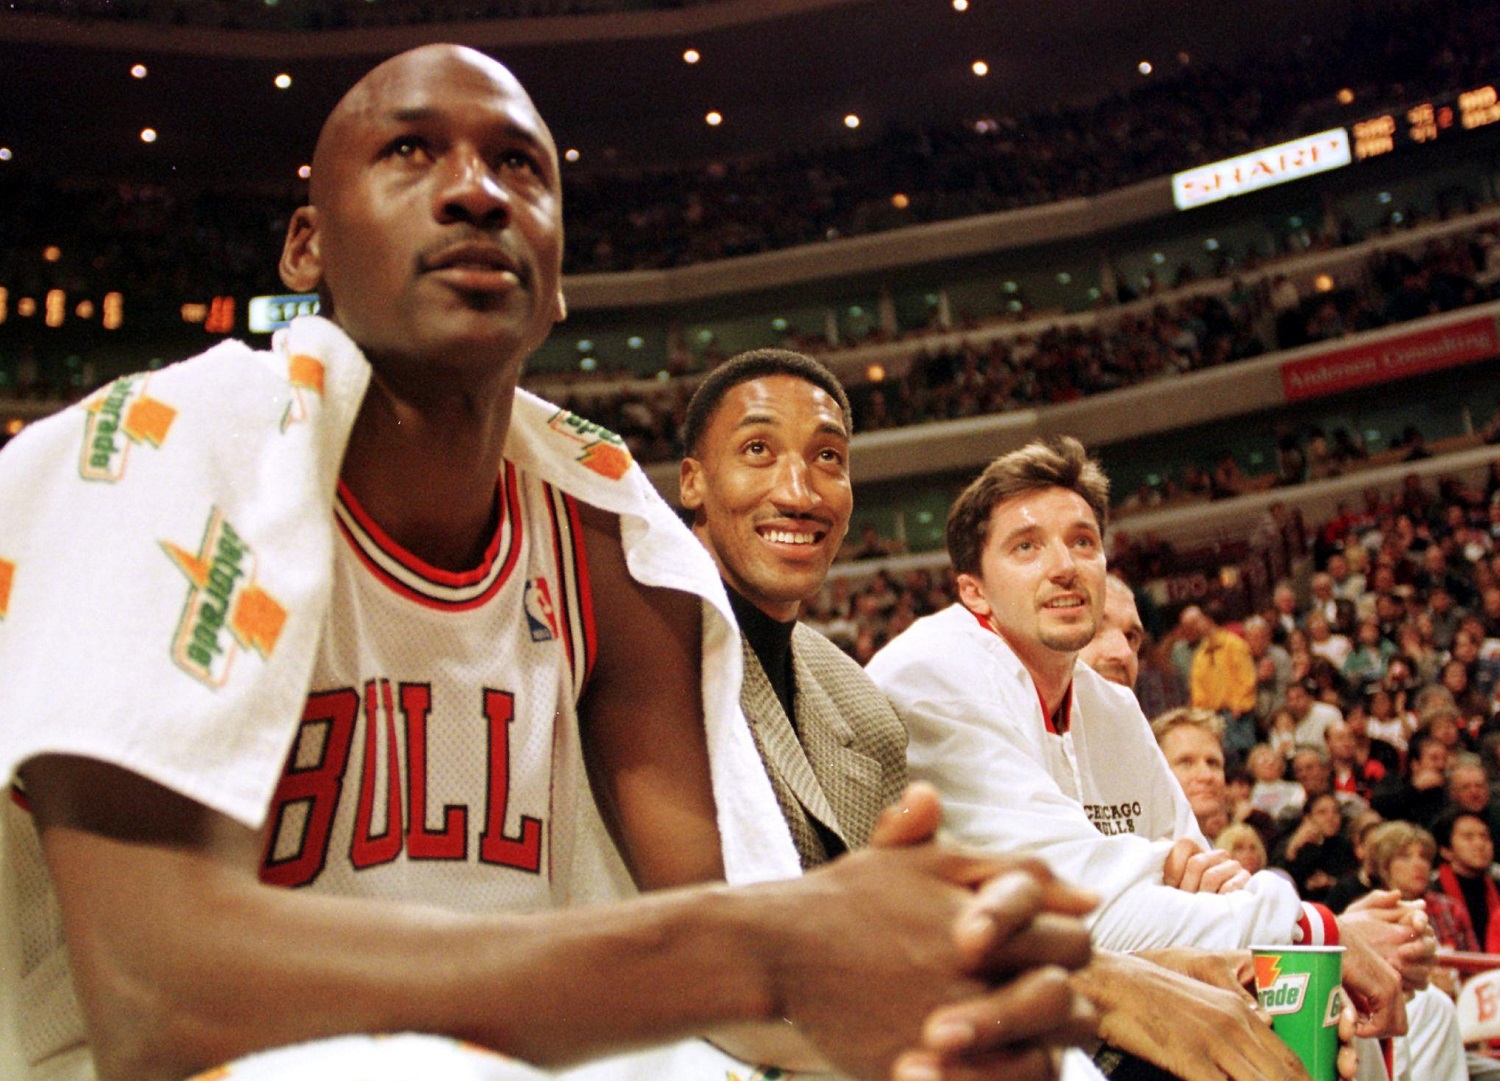 Chicago Bulls guard Michael Jordan watches his teammates play against the Milwaukee Bucks during a December 1997 NBA game.